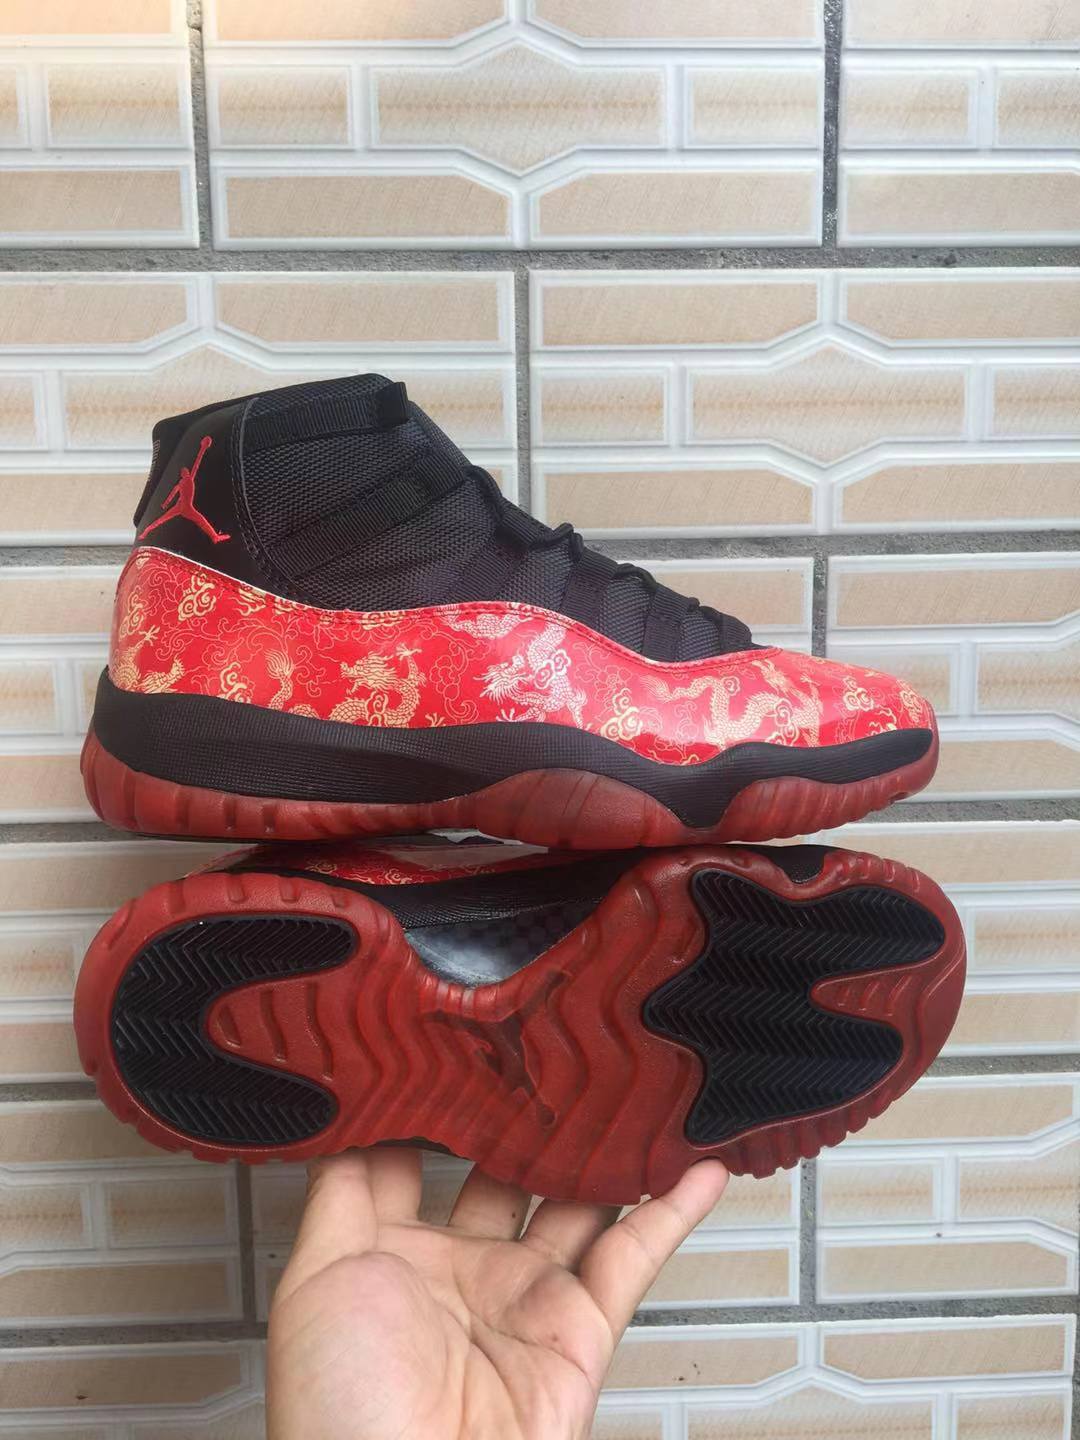 New Air Jordan 11 Red Dragon Black Shoes - Click Image to Close